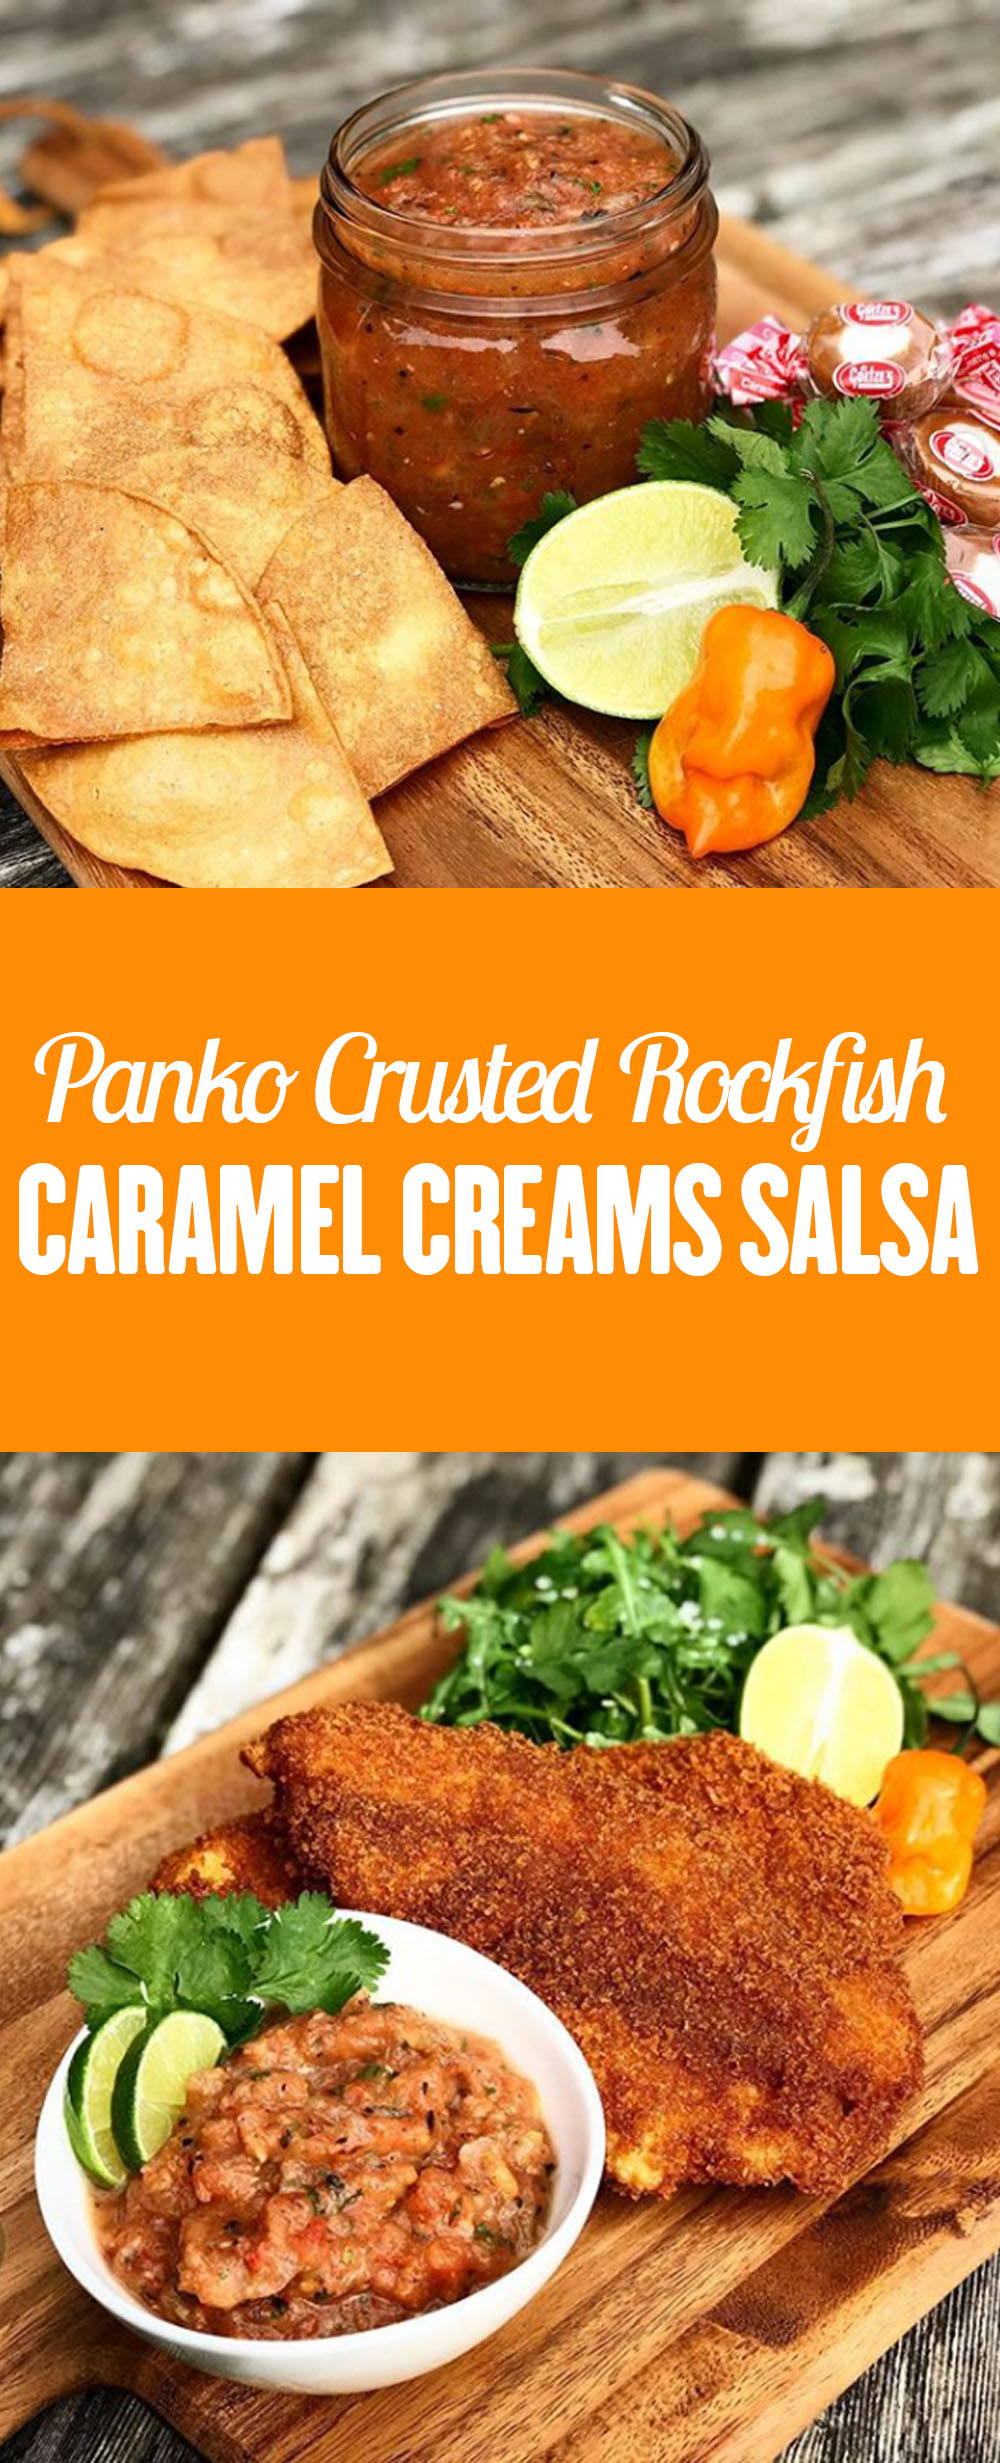 panko-crusted-rockfish-caramel-creams-salsa